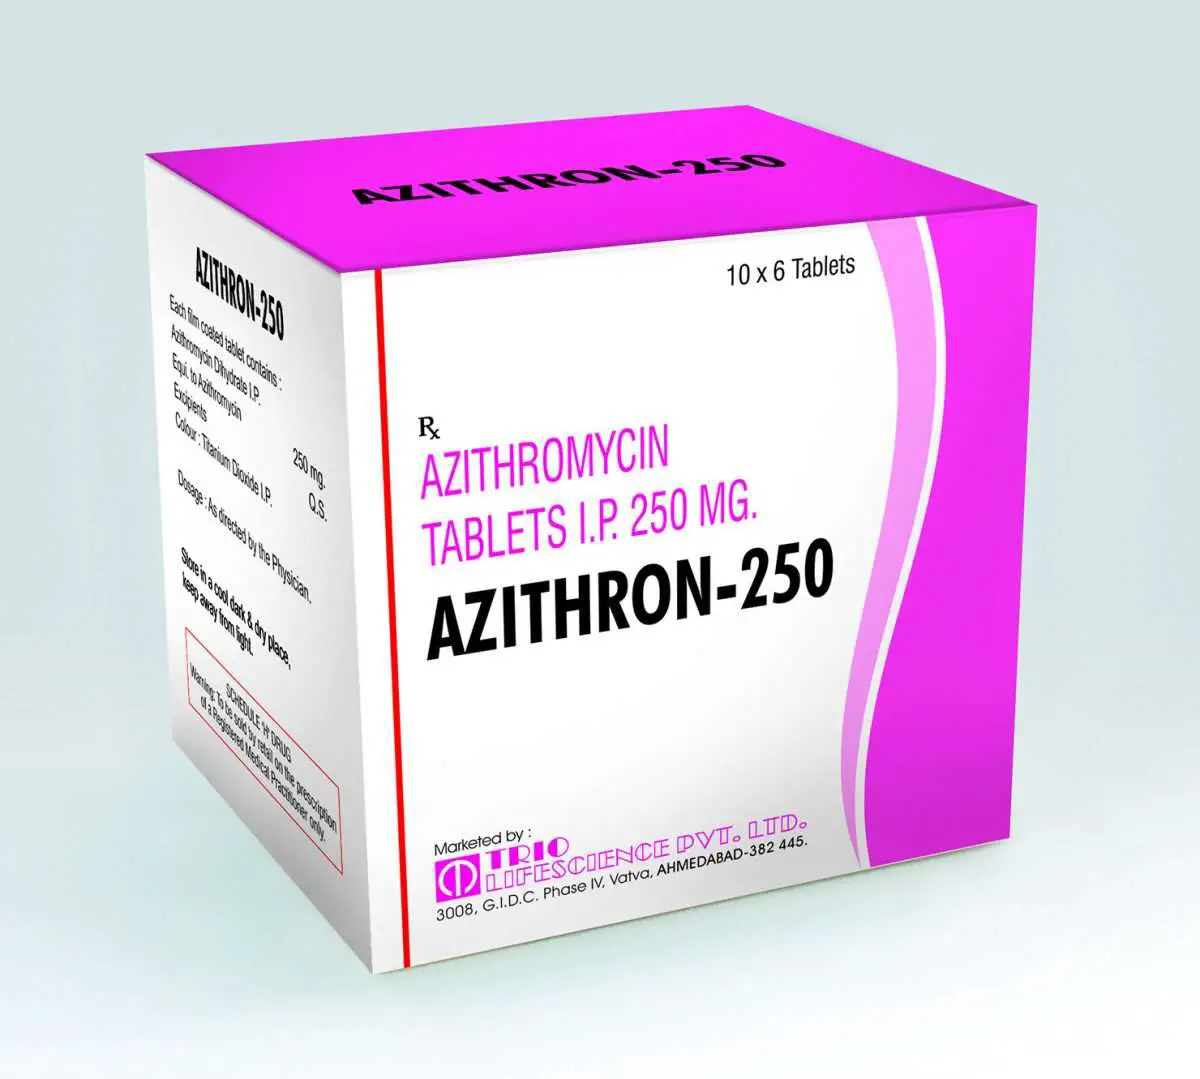 Trio Lifescience Azithron Azithromycin 250 mg Tablet, Rs 260 /box